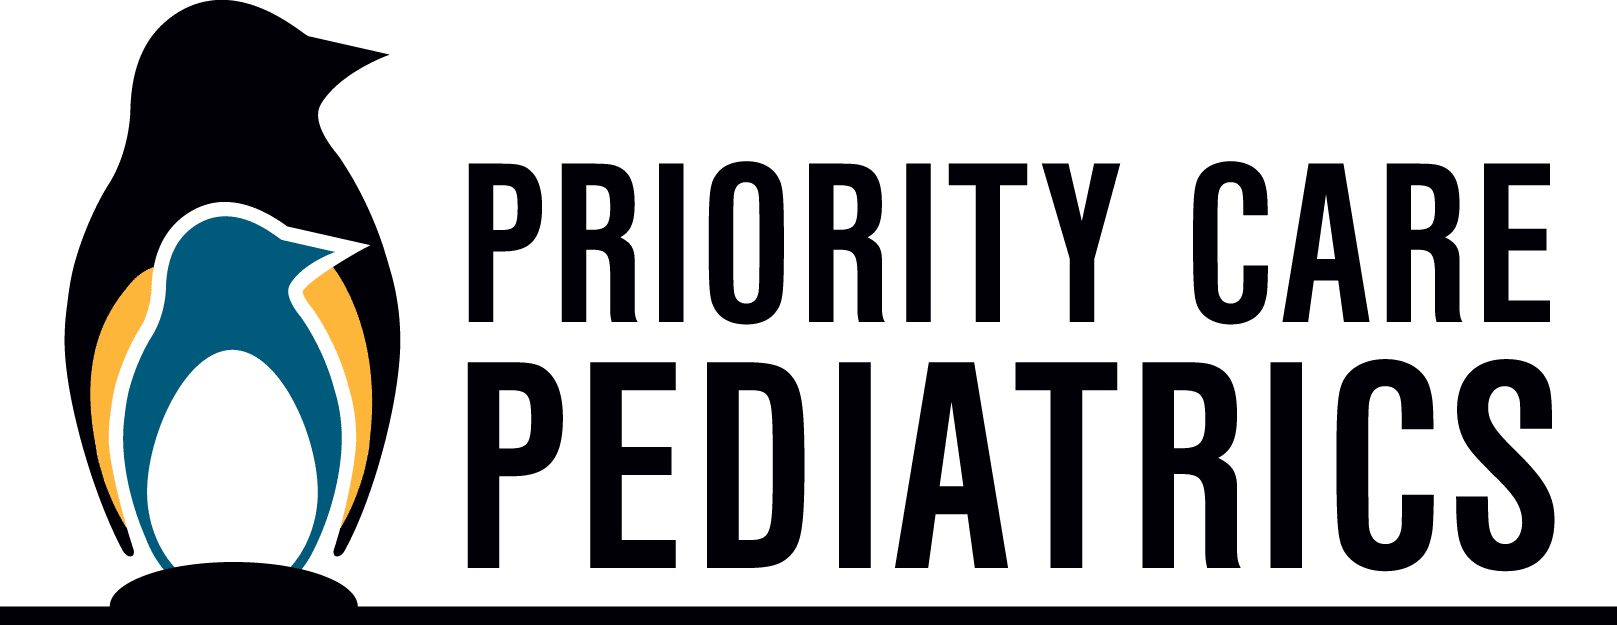 Priority Care Pediatrics logo